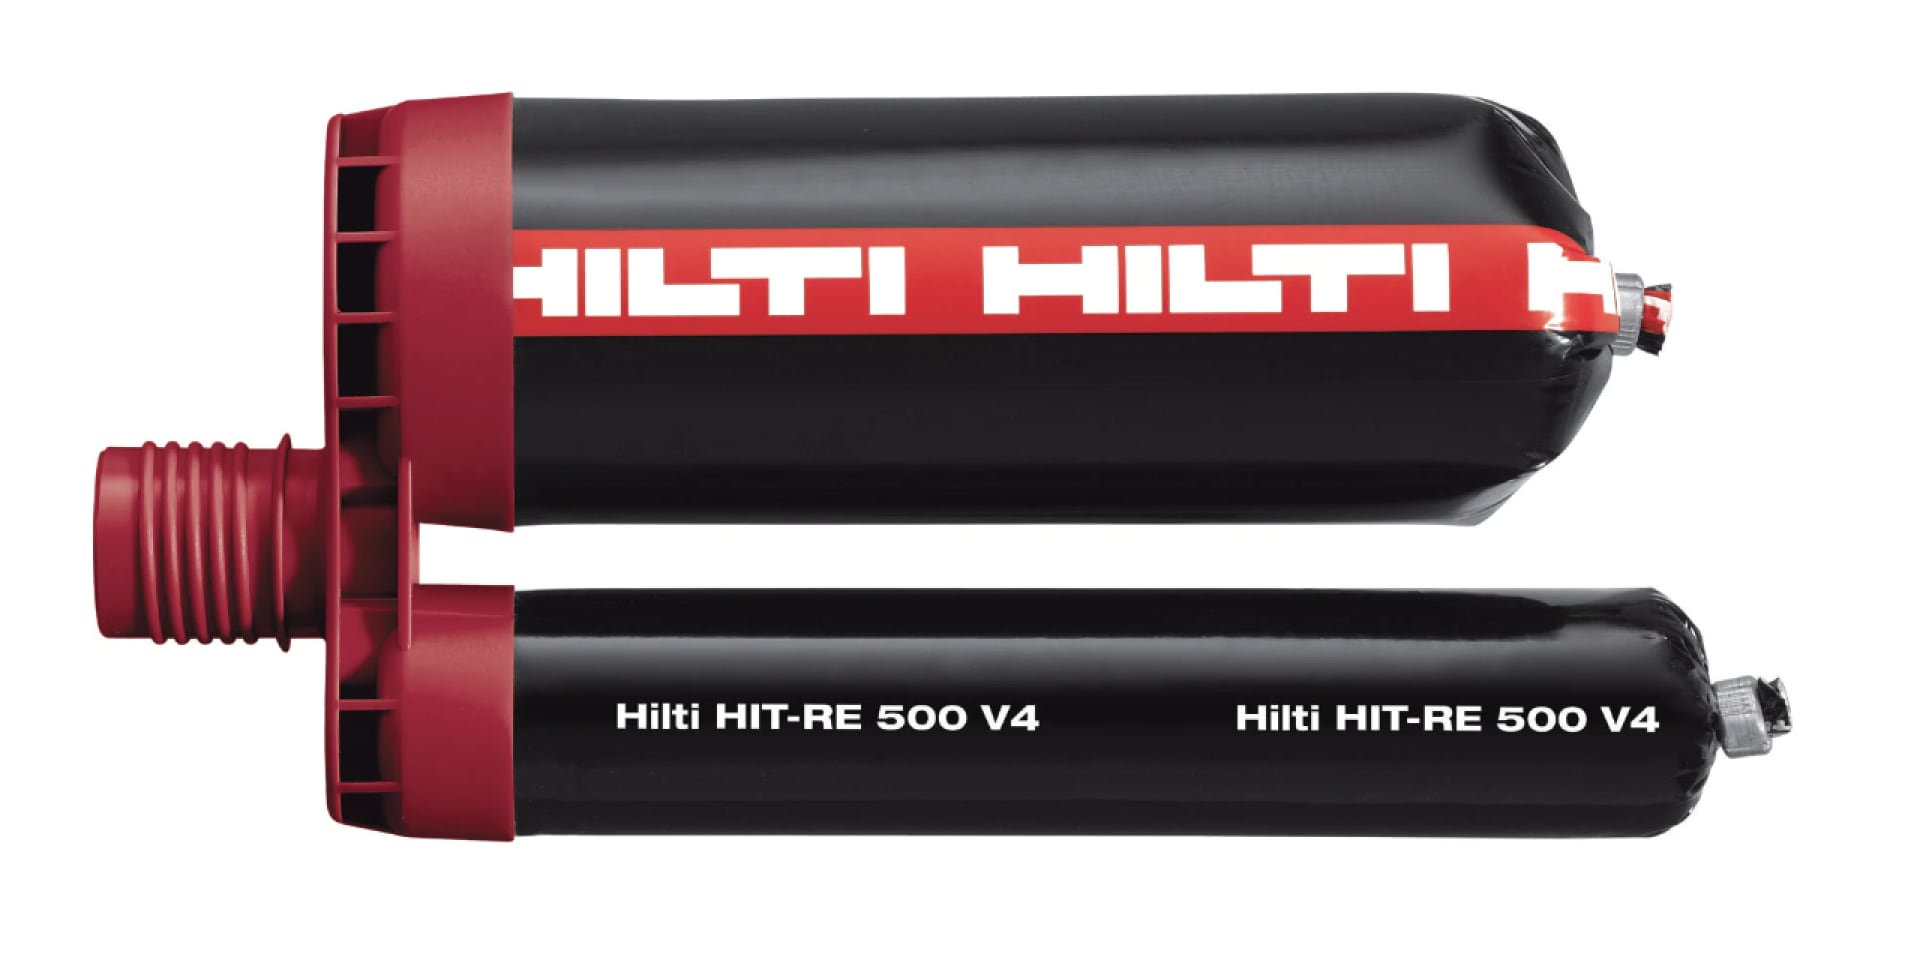 HIT-RE 500 V4